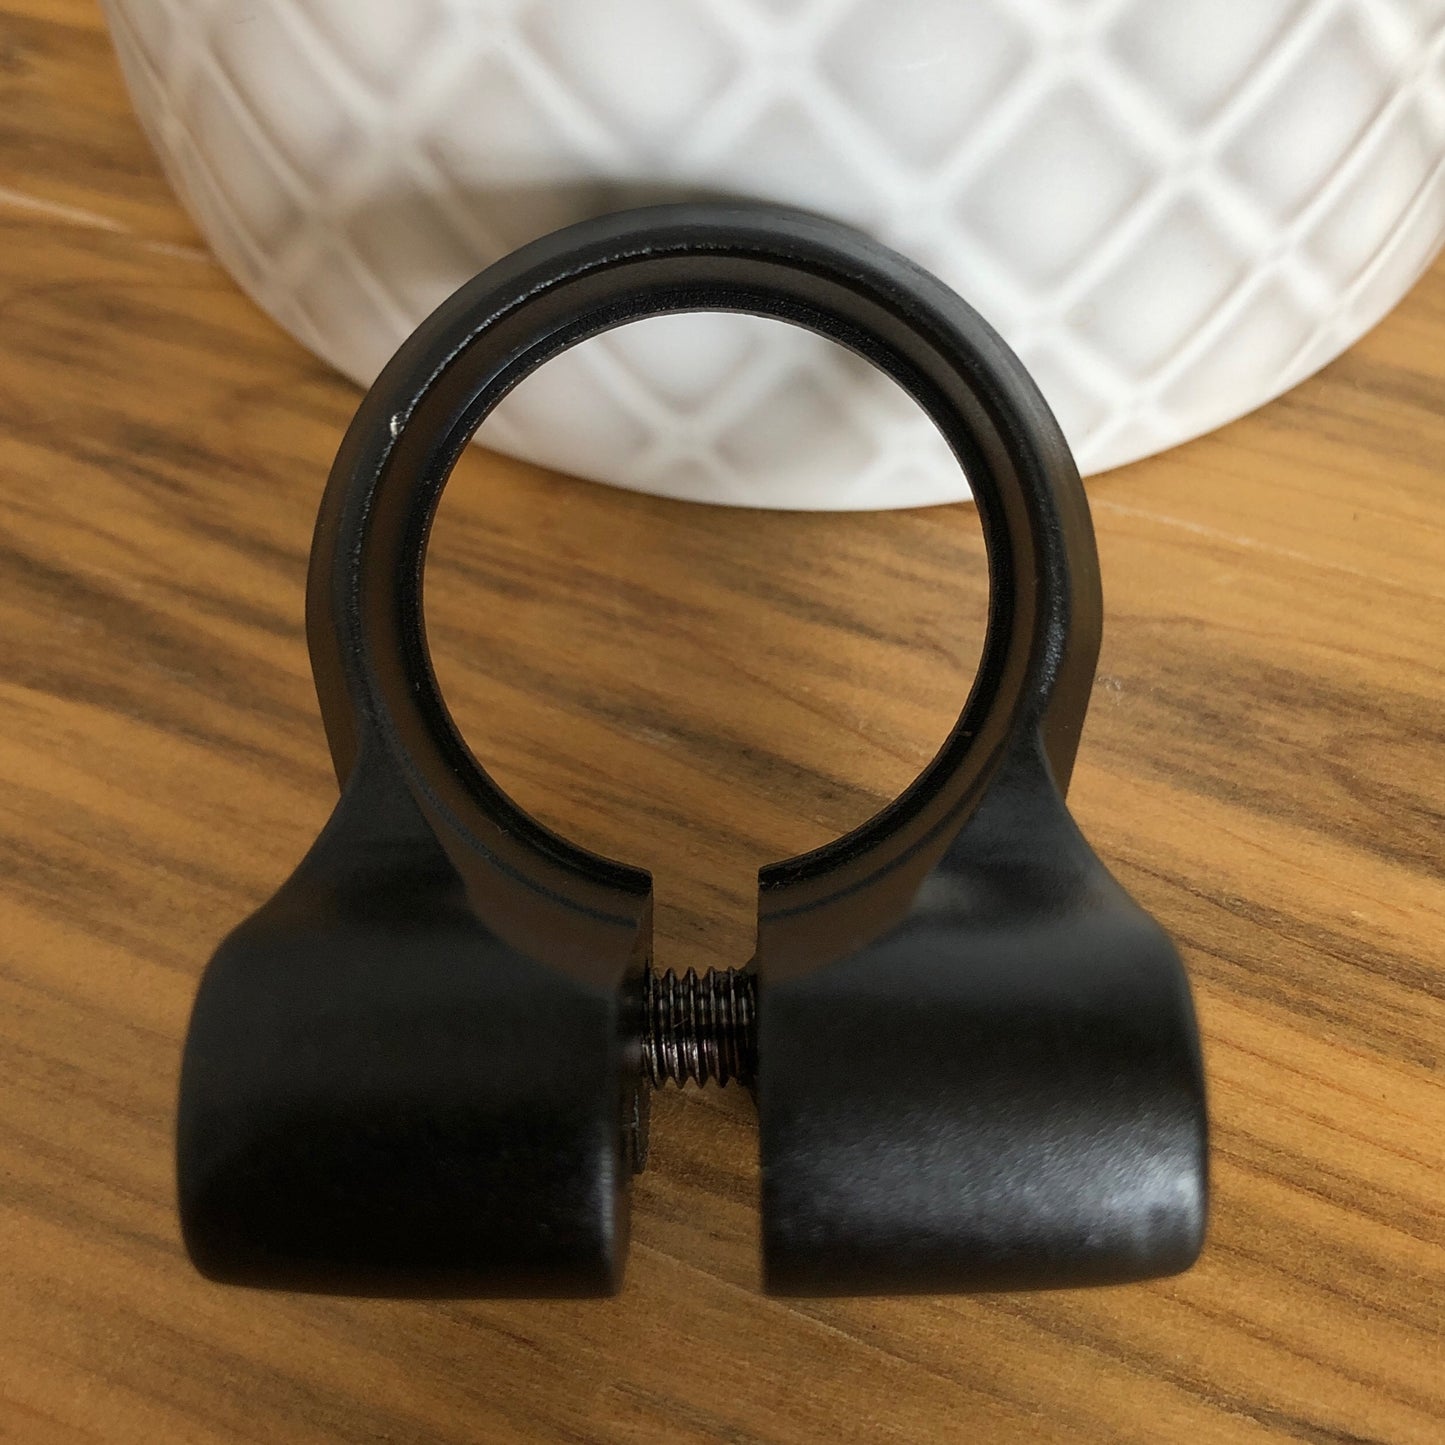 Sunlite Bicycle Rack Seat Clamp 34.9mm Black